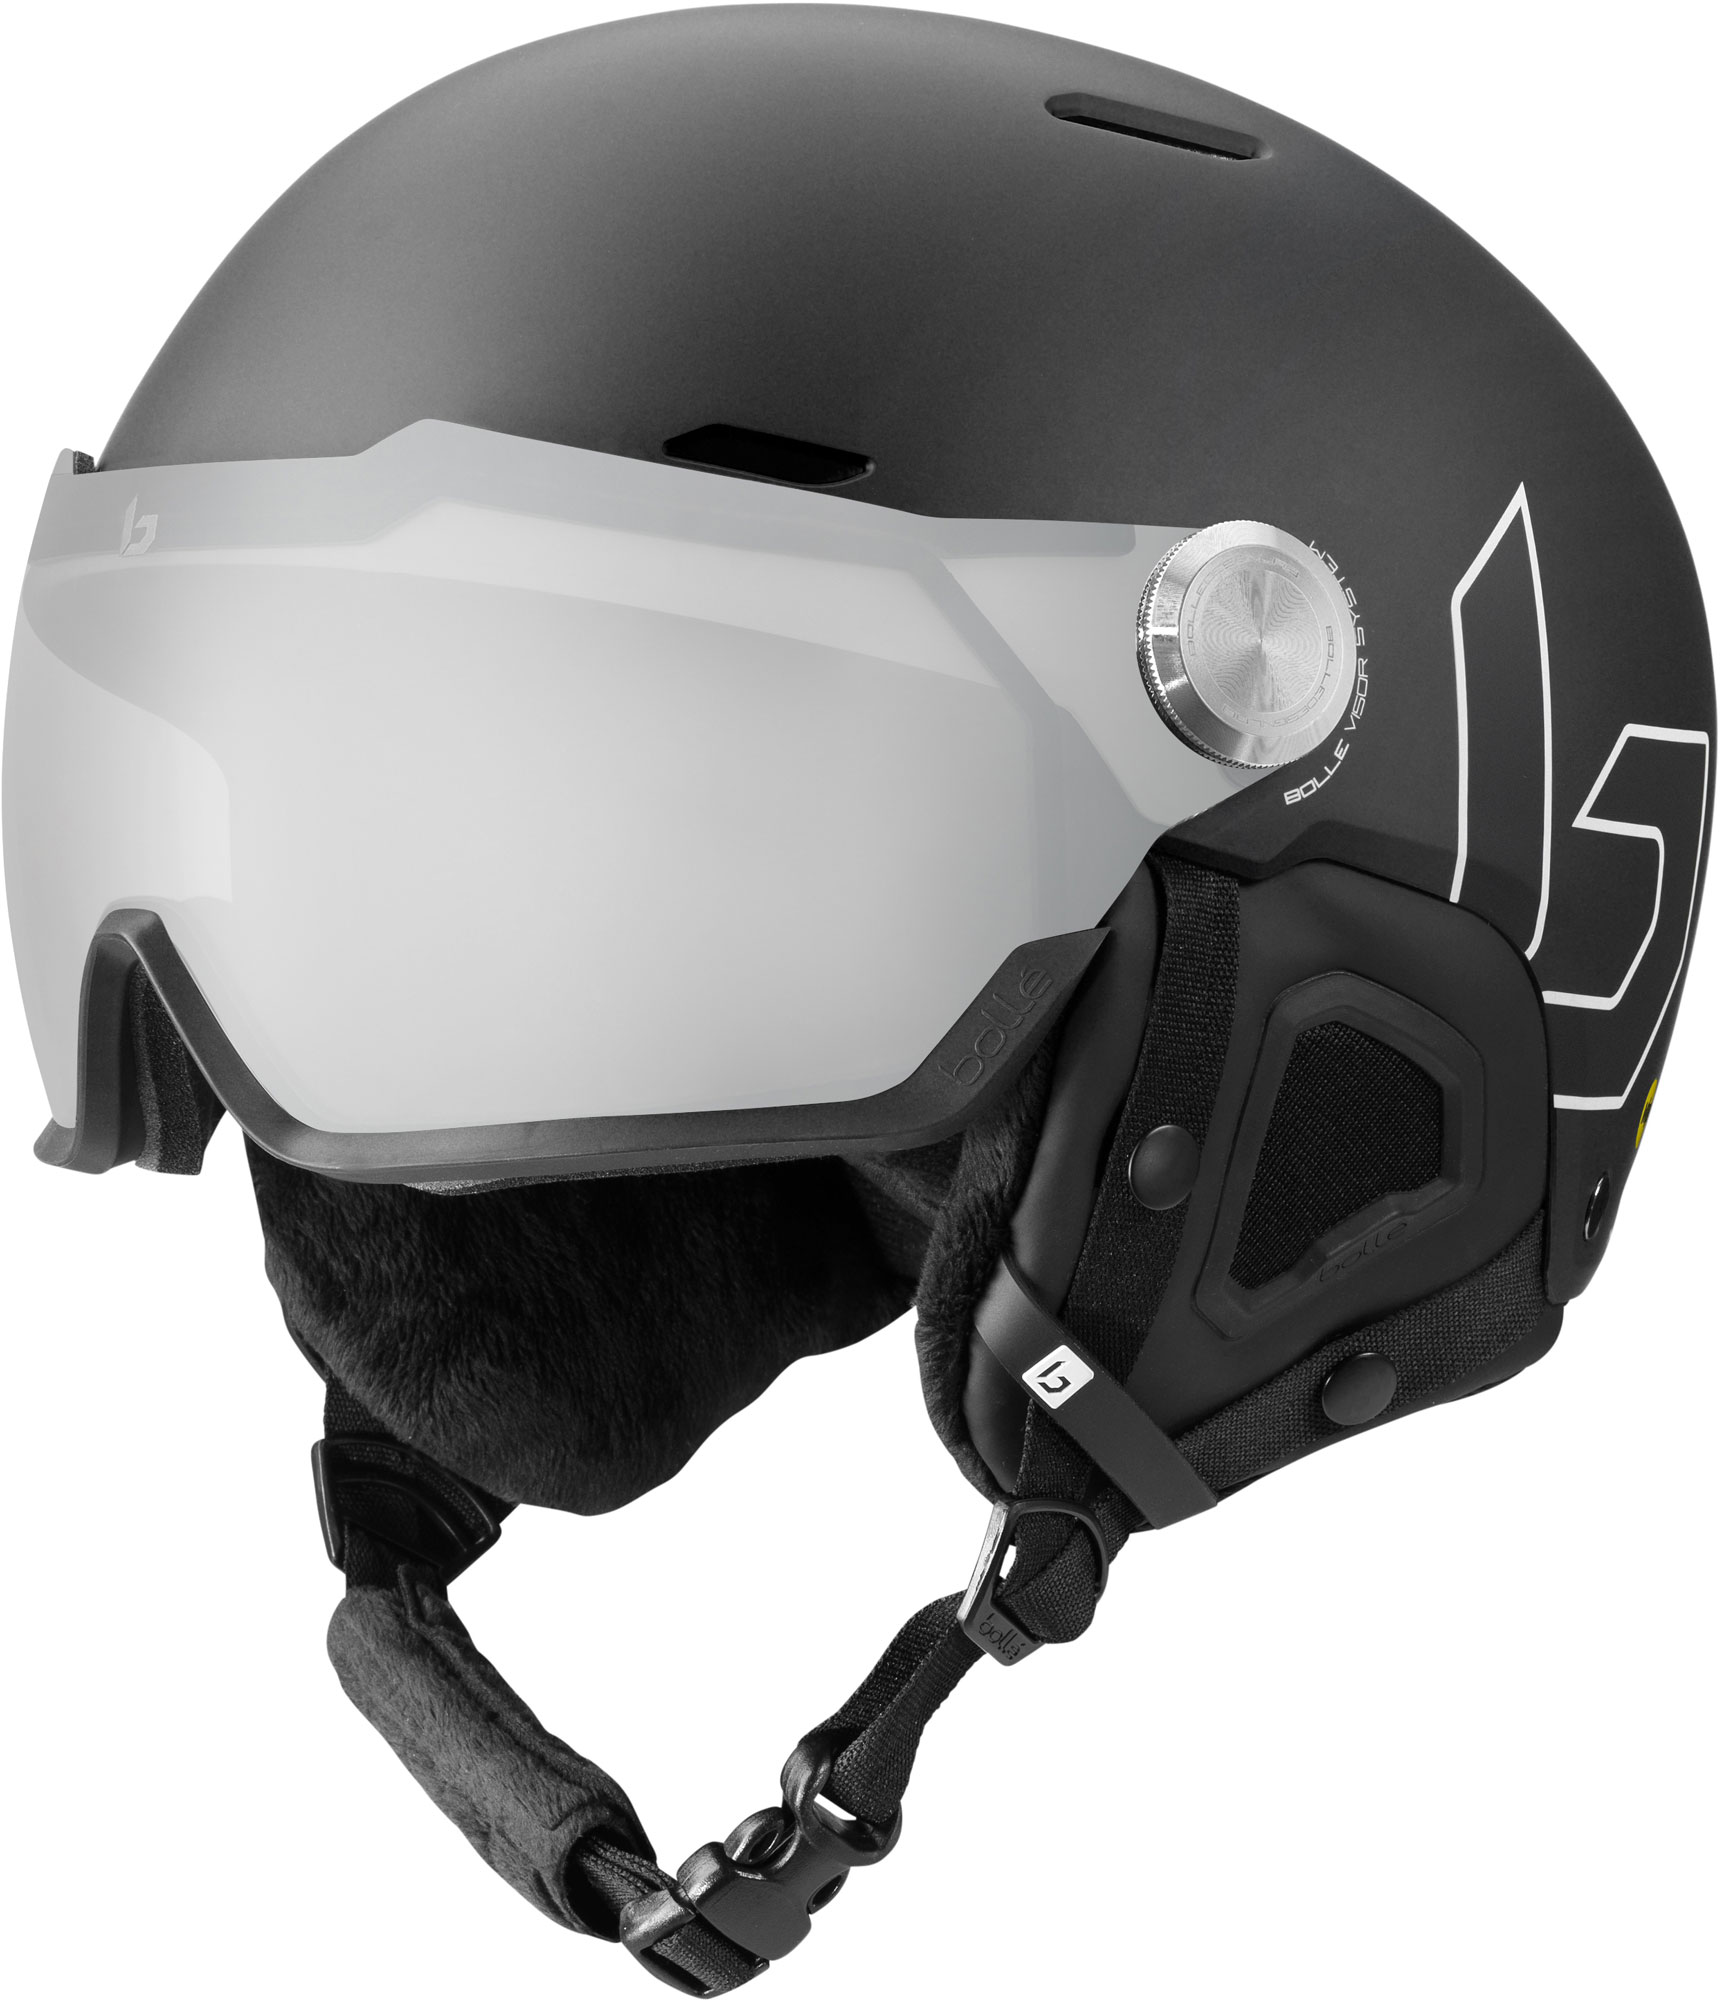 Downhill helmet with a self-tinting visor